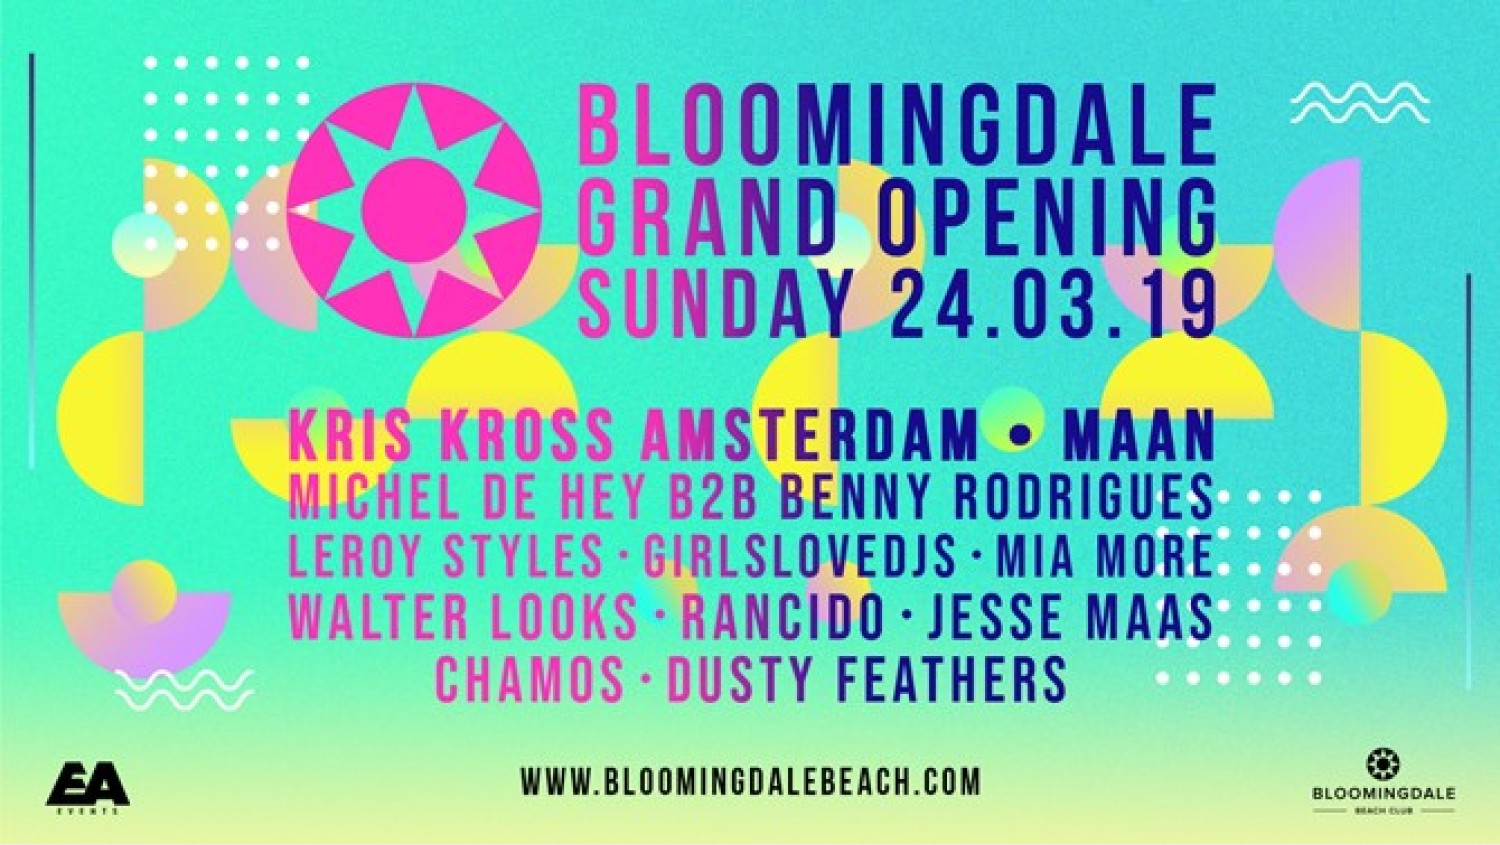 Party nieuws: Kriss Kross Amsterdam bij Grand Opening Bloomingdale